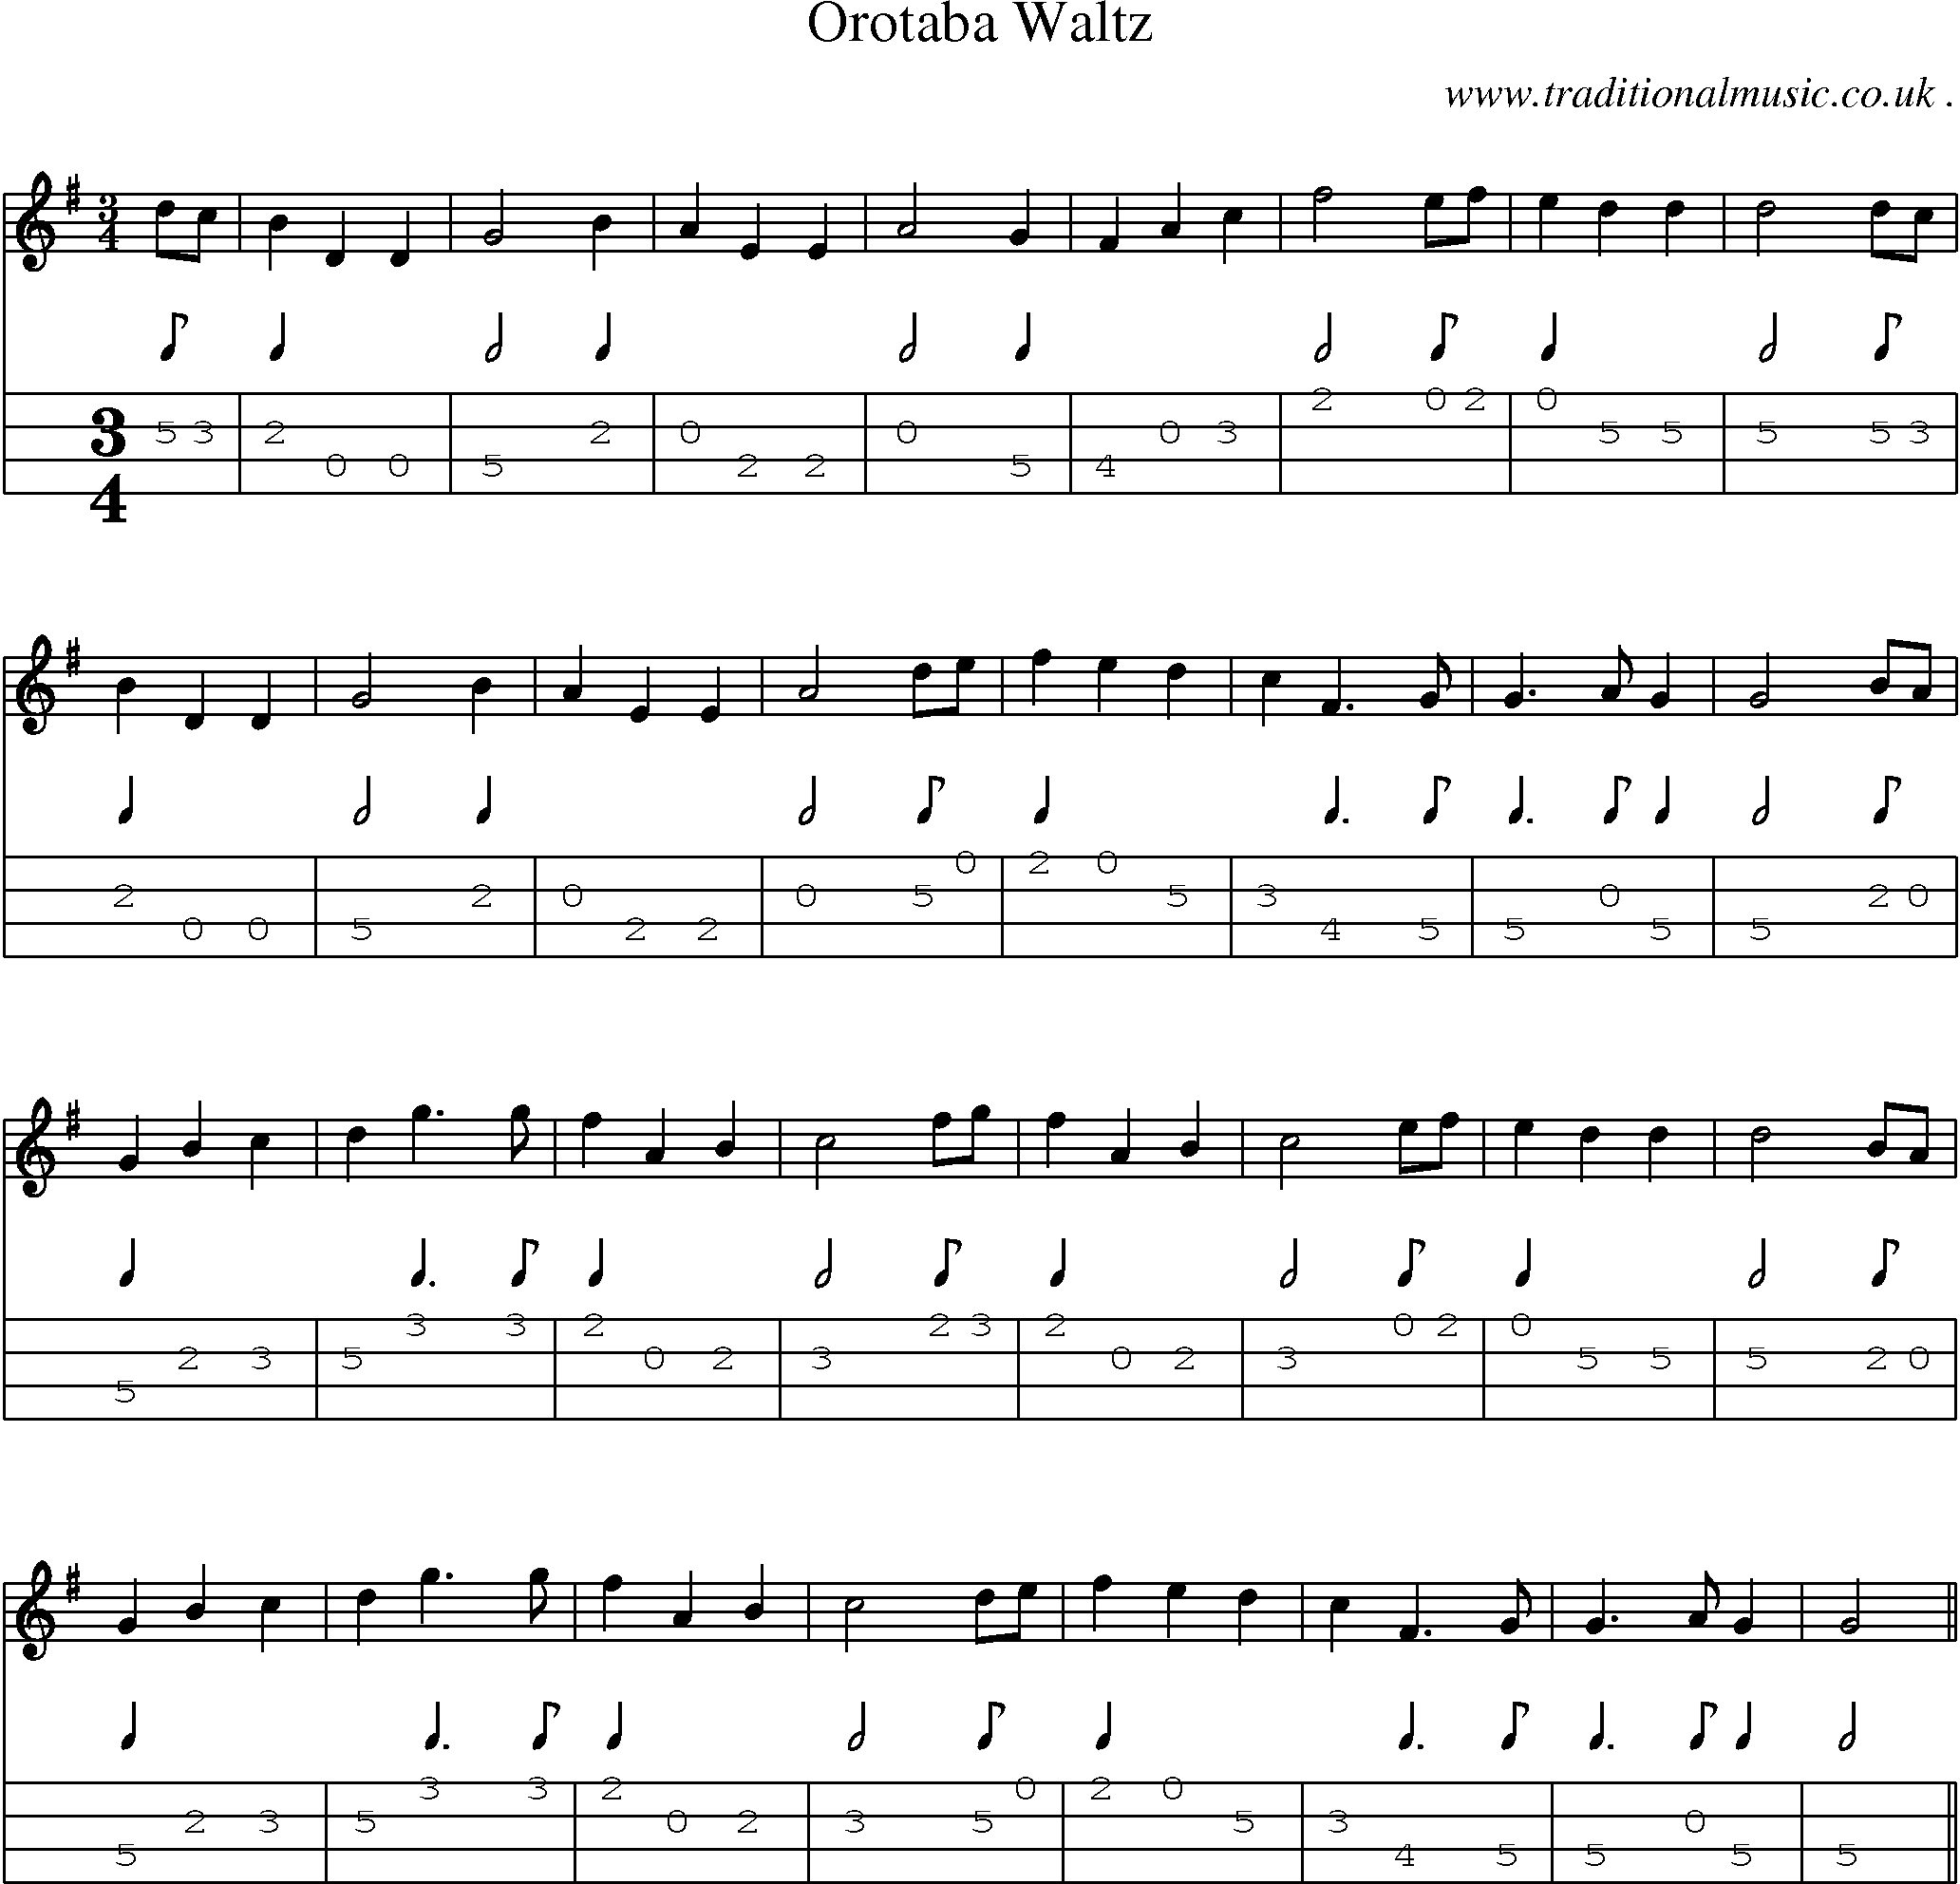 Sheet-Music and Mandolin Tabs for Orotaba Waltz